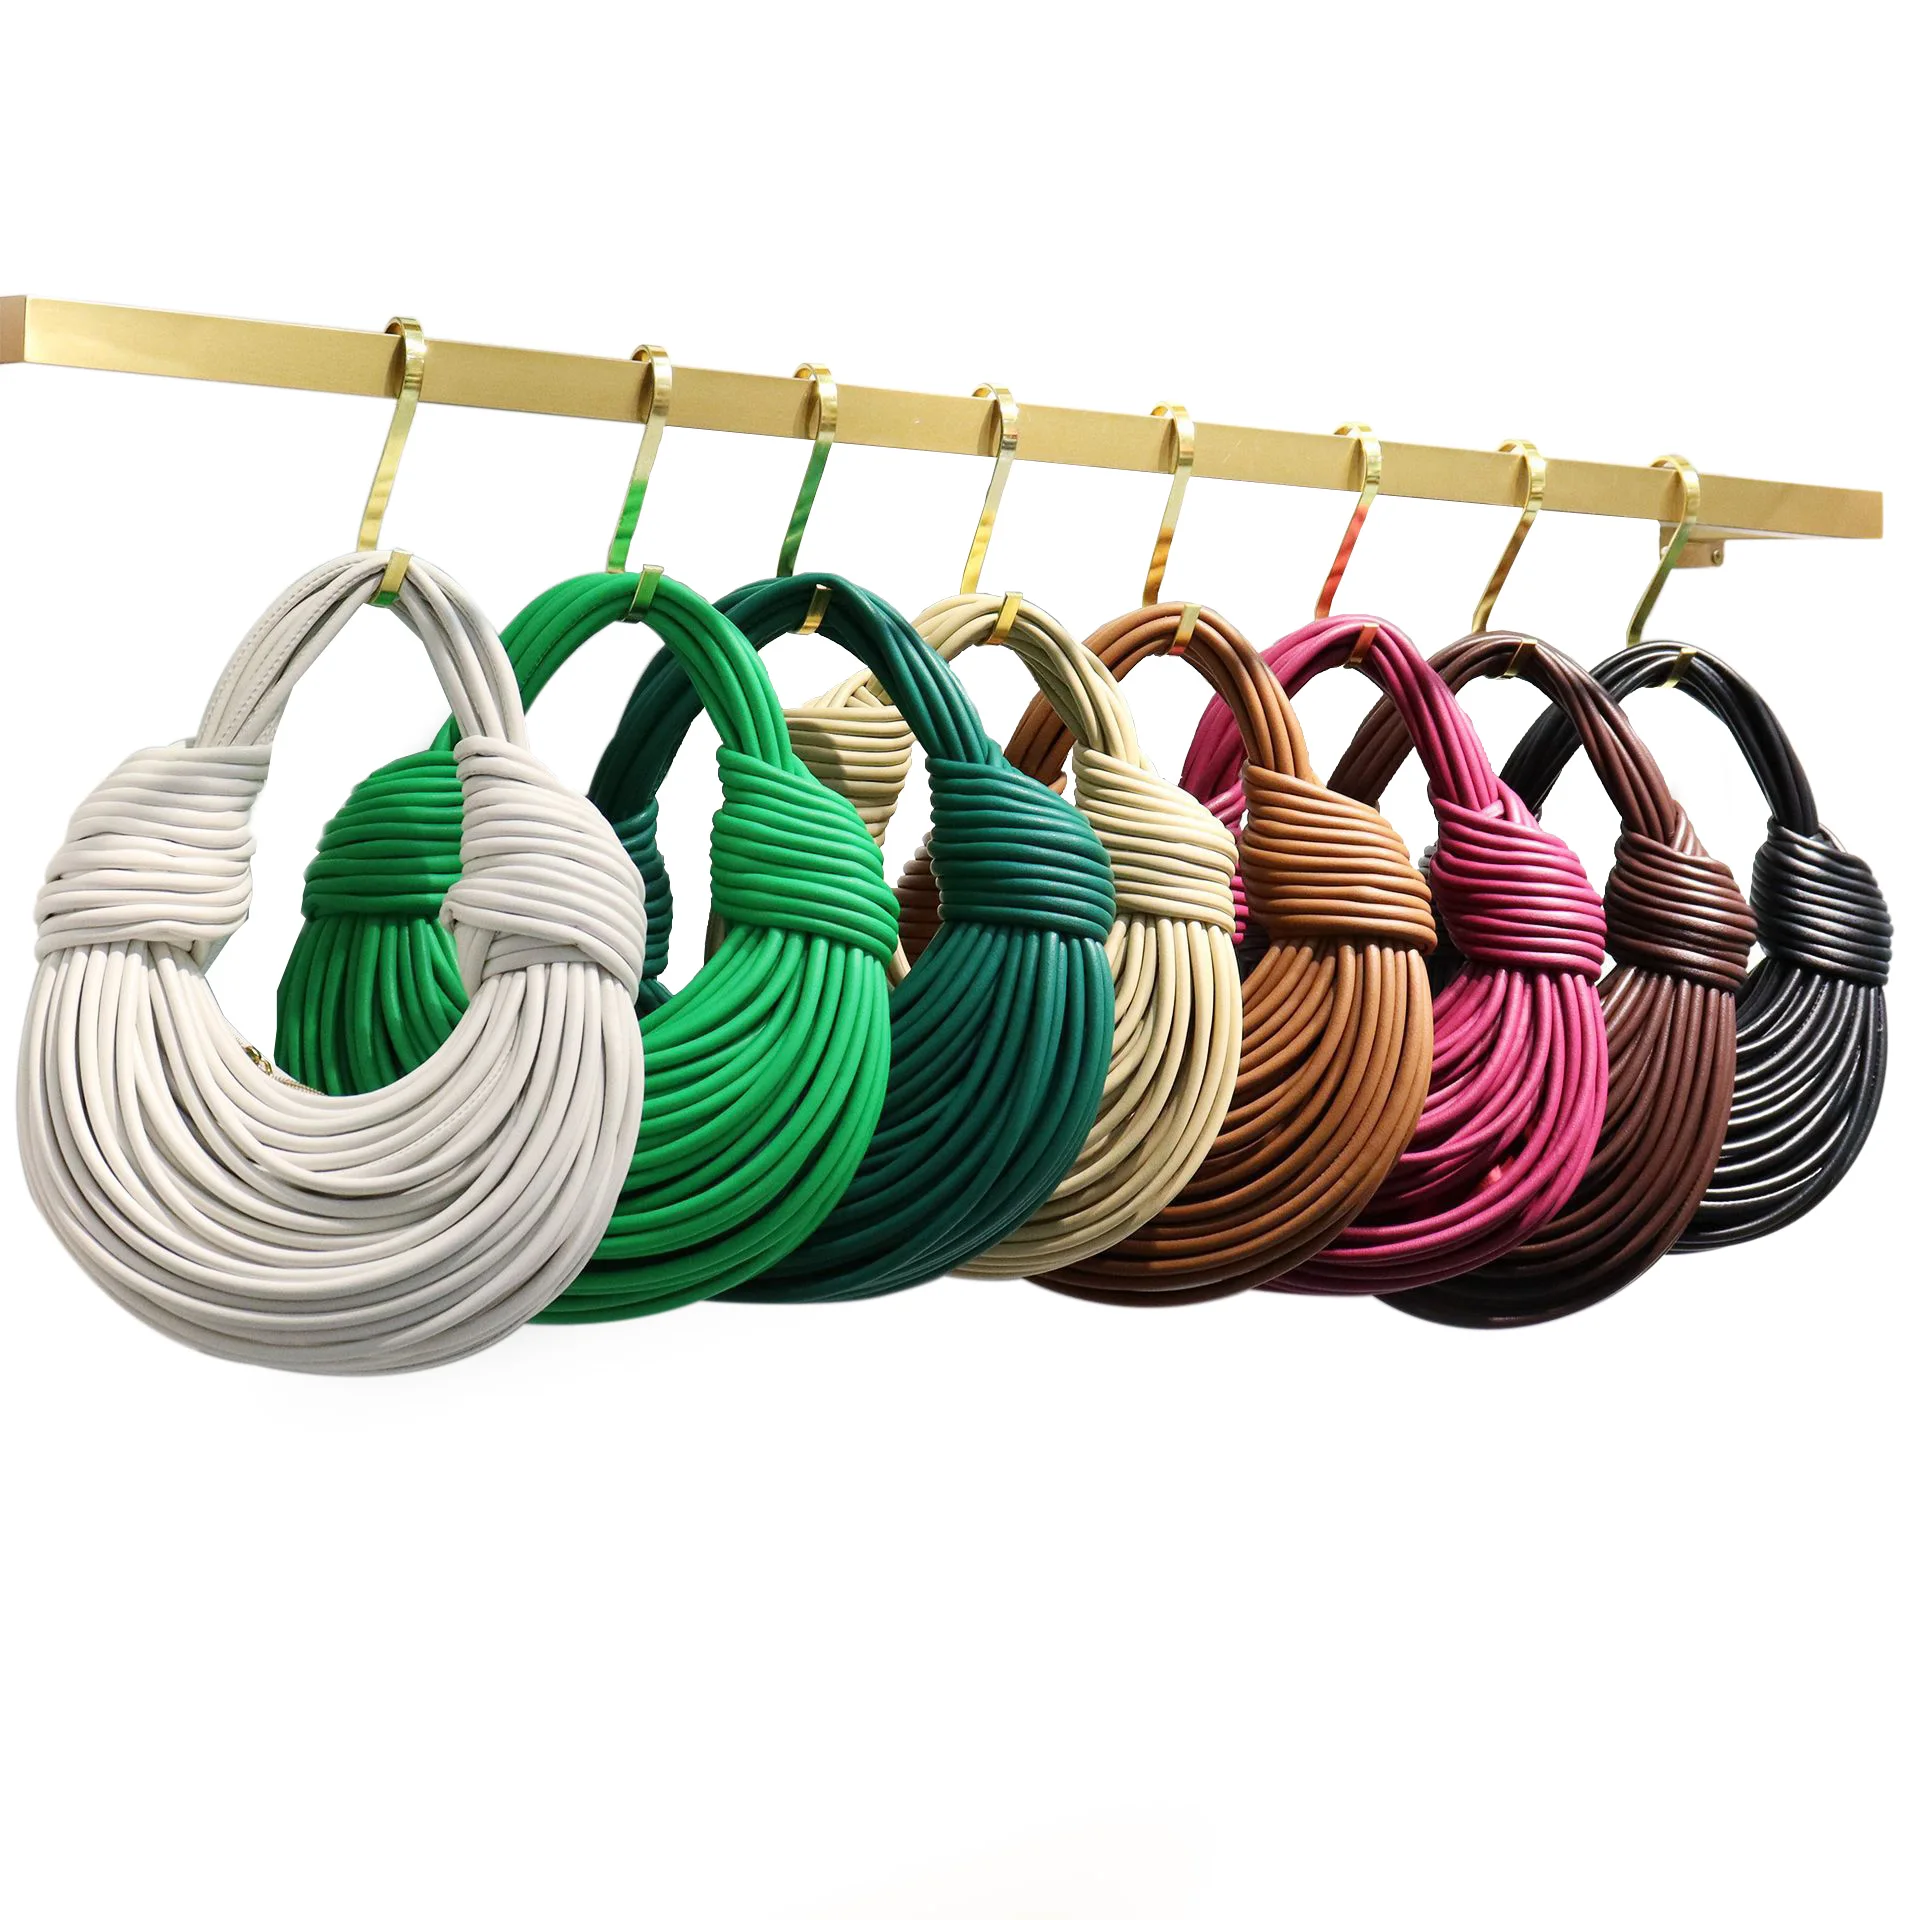 

Australia designer 2022 Double knot lines straps looksalike noodles fashion line handbag hobo handbags, Customized color